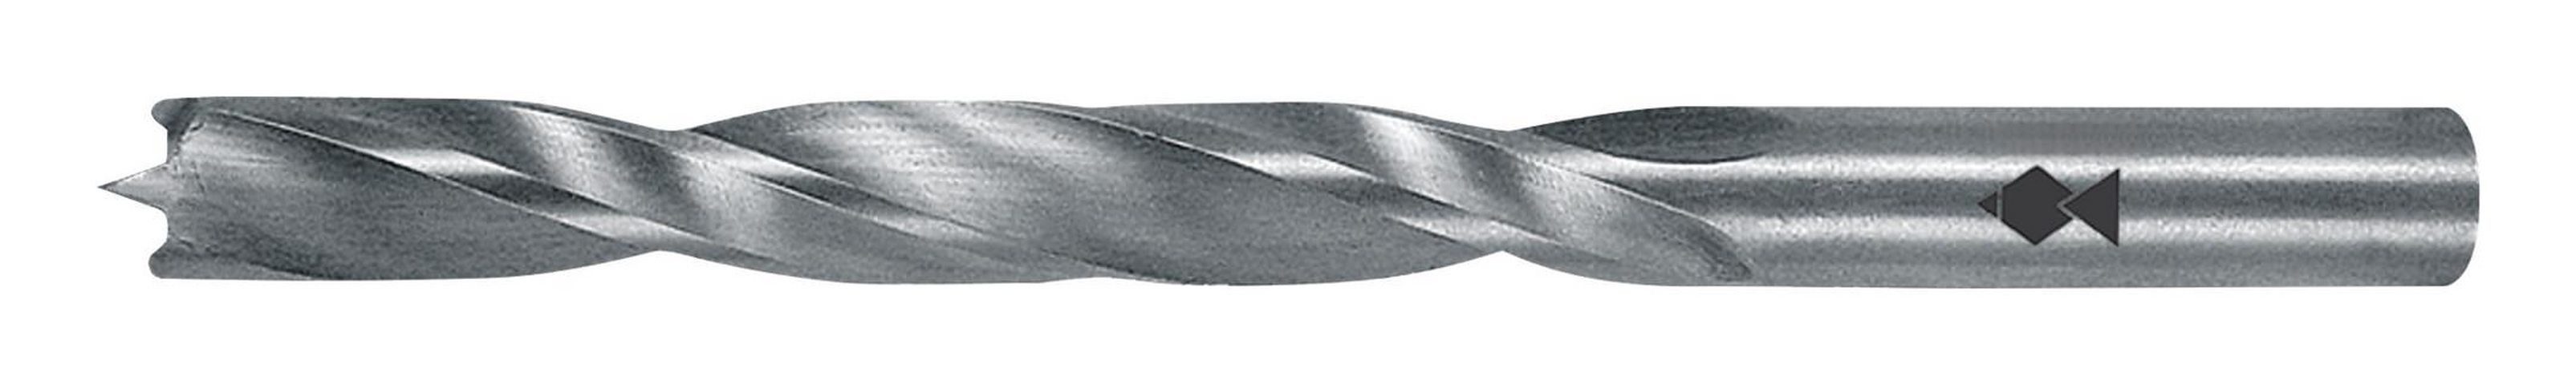 Fisch Holzbohrer, Holzspiralbohrer HSS R Profi 3 x 30 / 70 mm S 3 mm